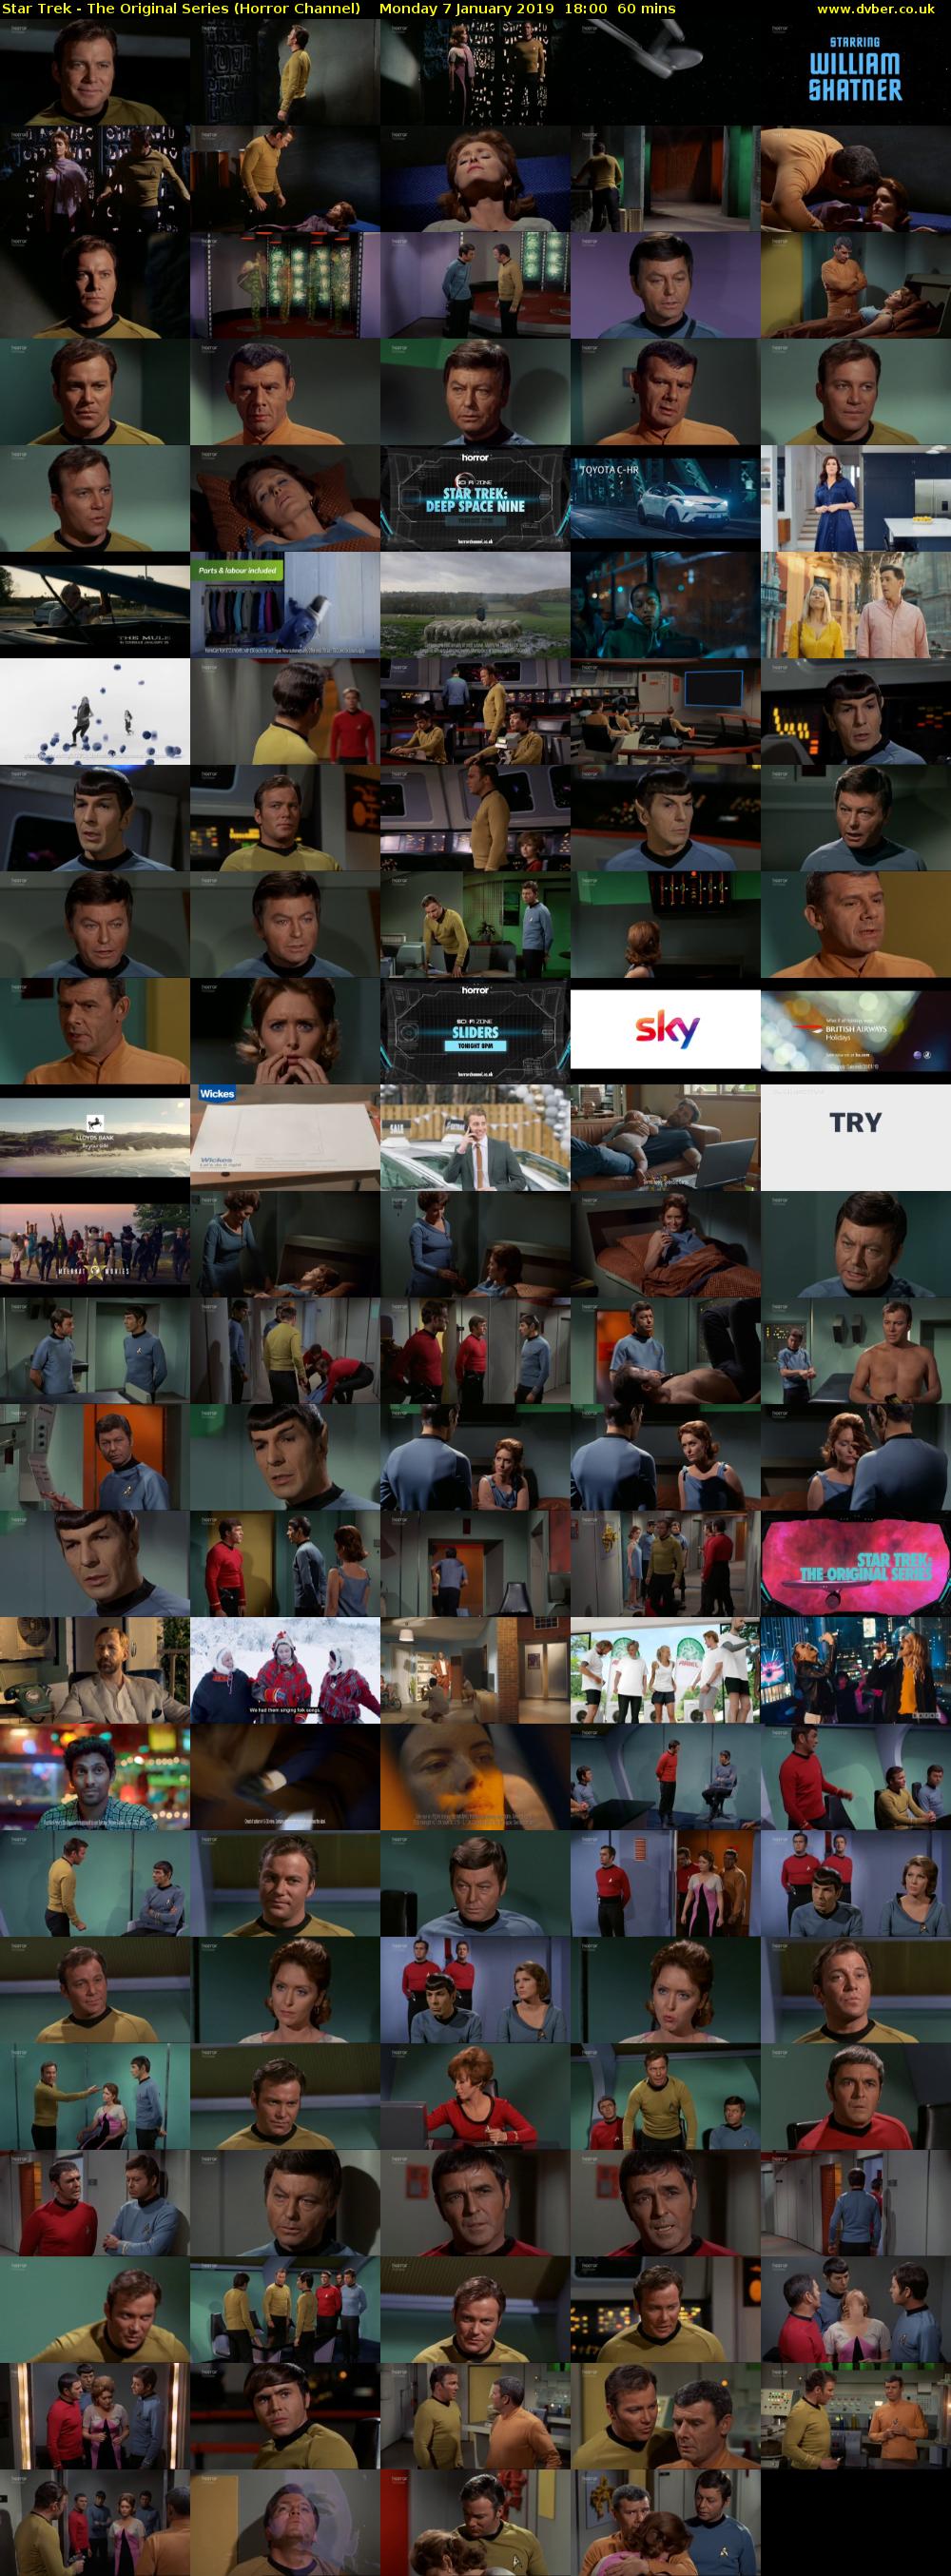 Star Trek - The Original Series (Horror Channel) Monday 7 January 2019 18:00 - 19:00